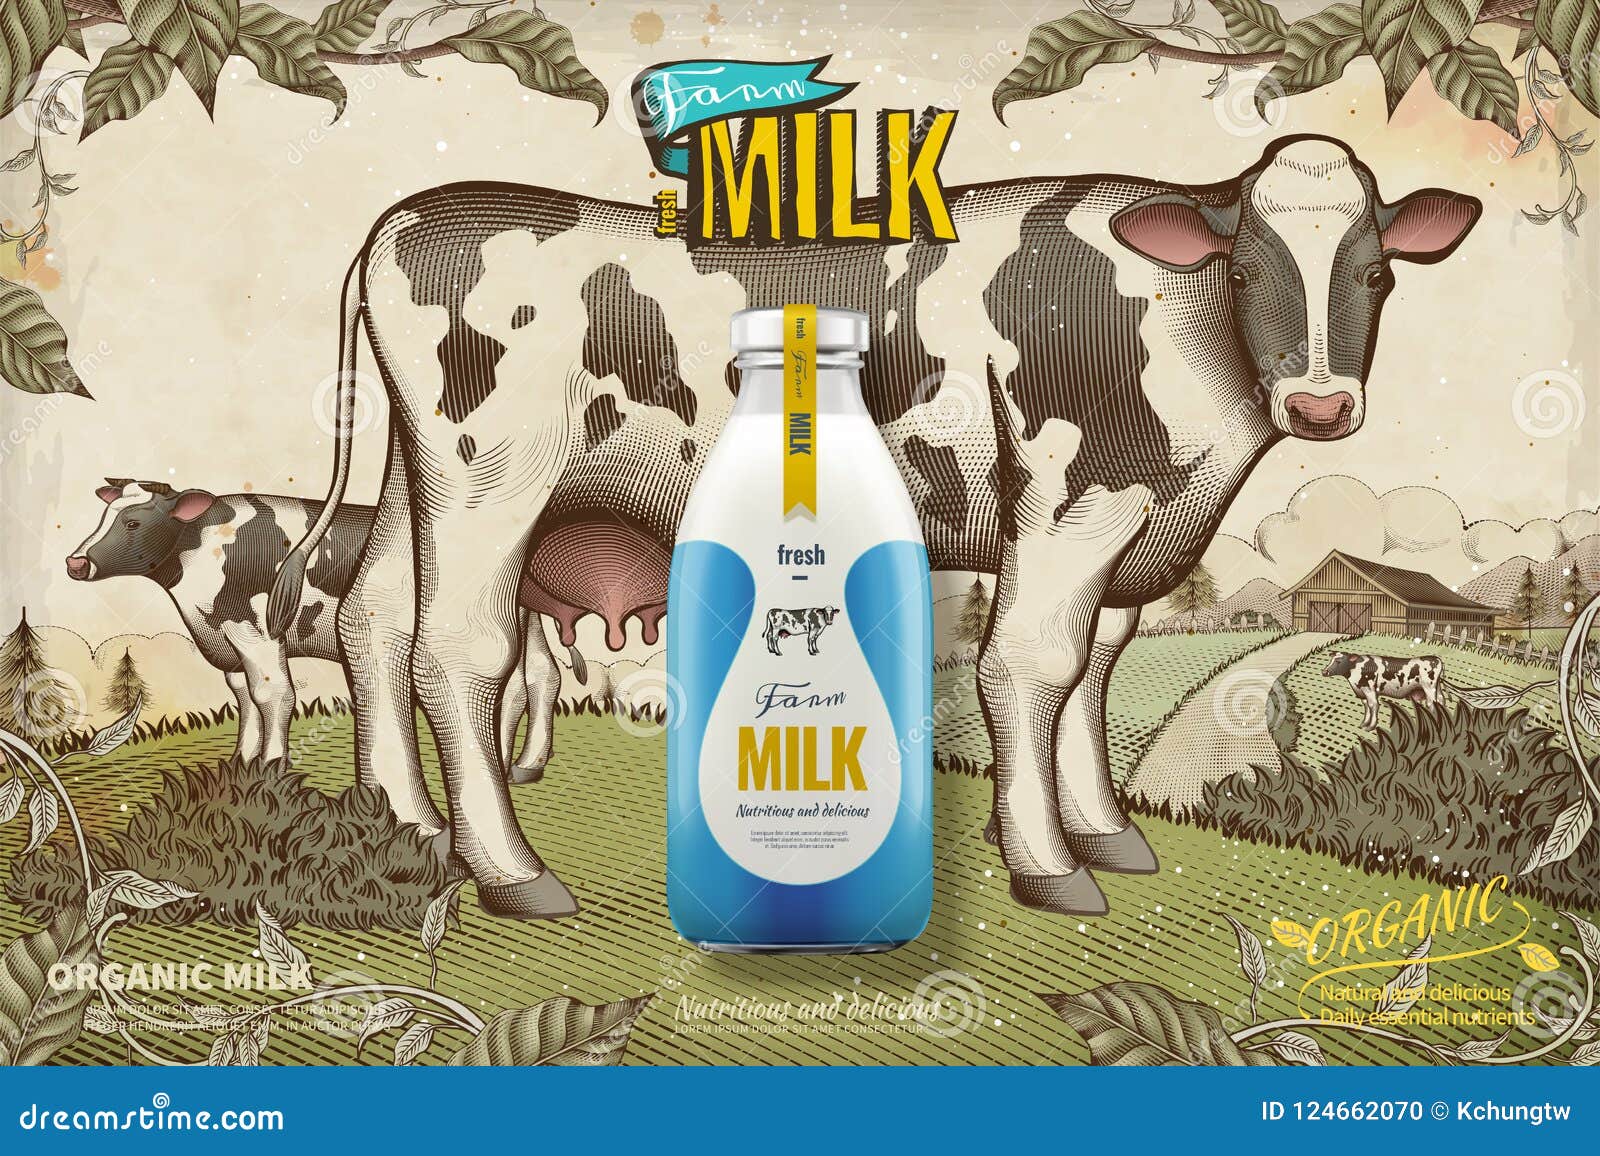 Fresh milk farm Milk